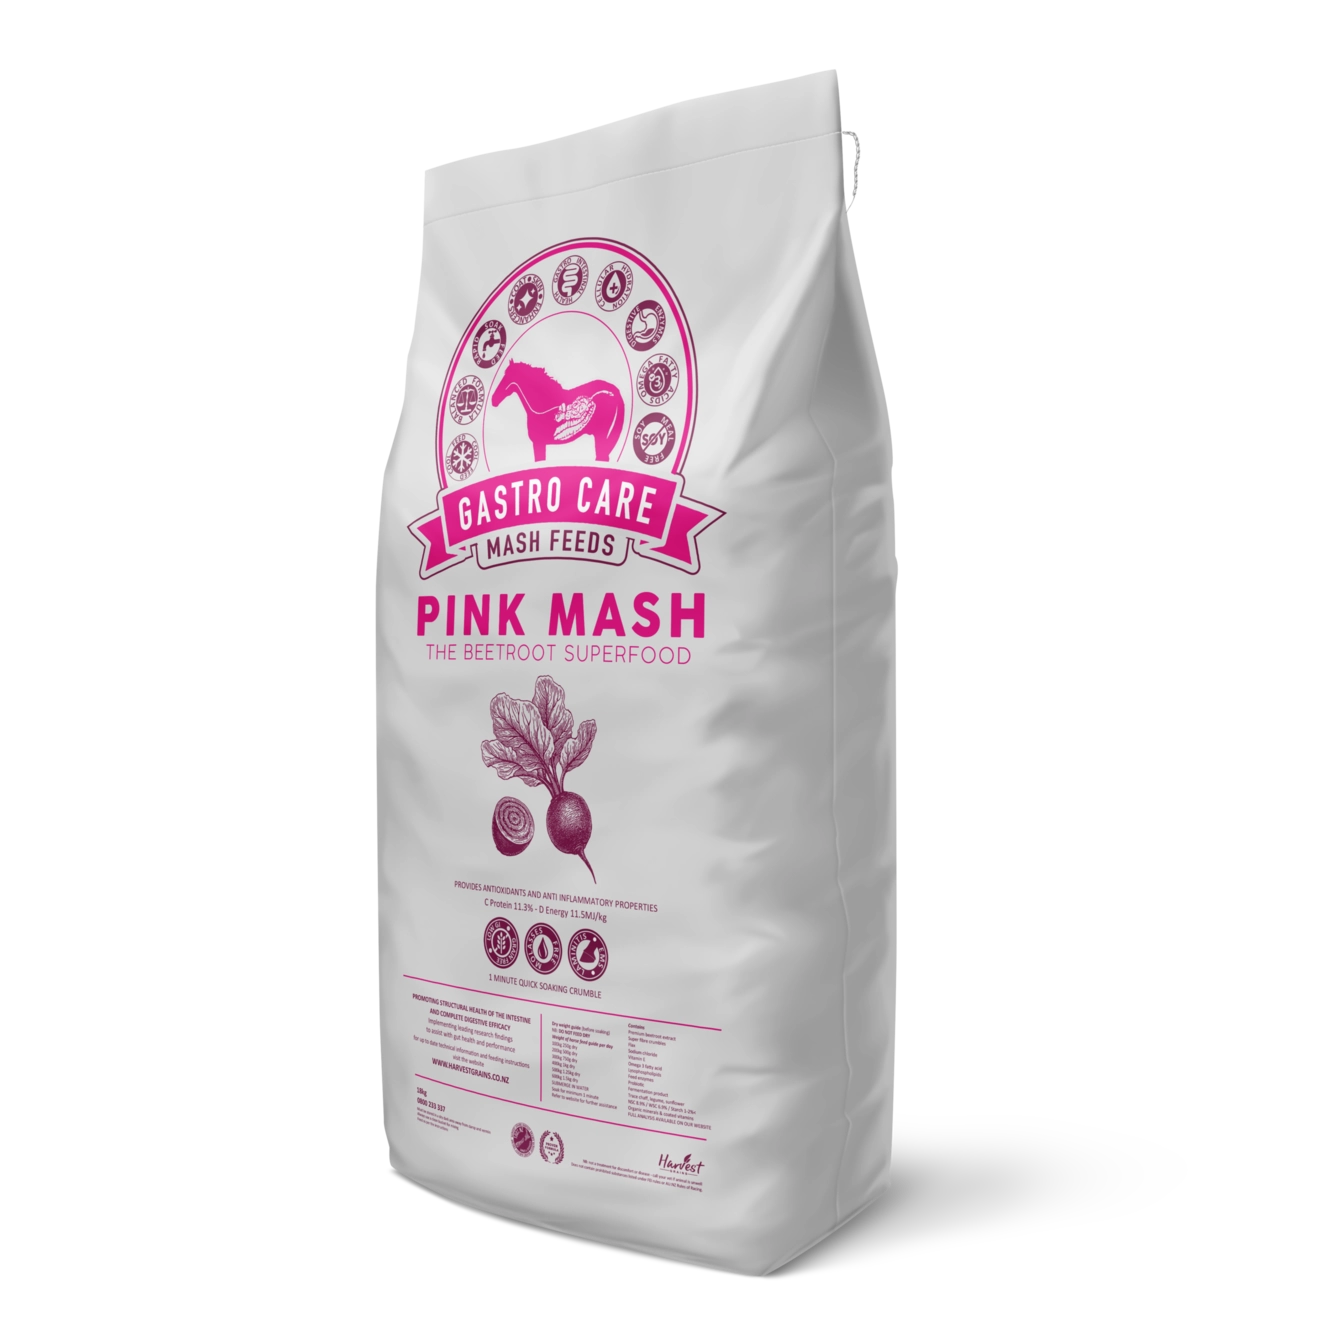 Gastric Care Pink Mash